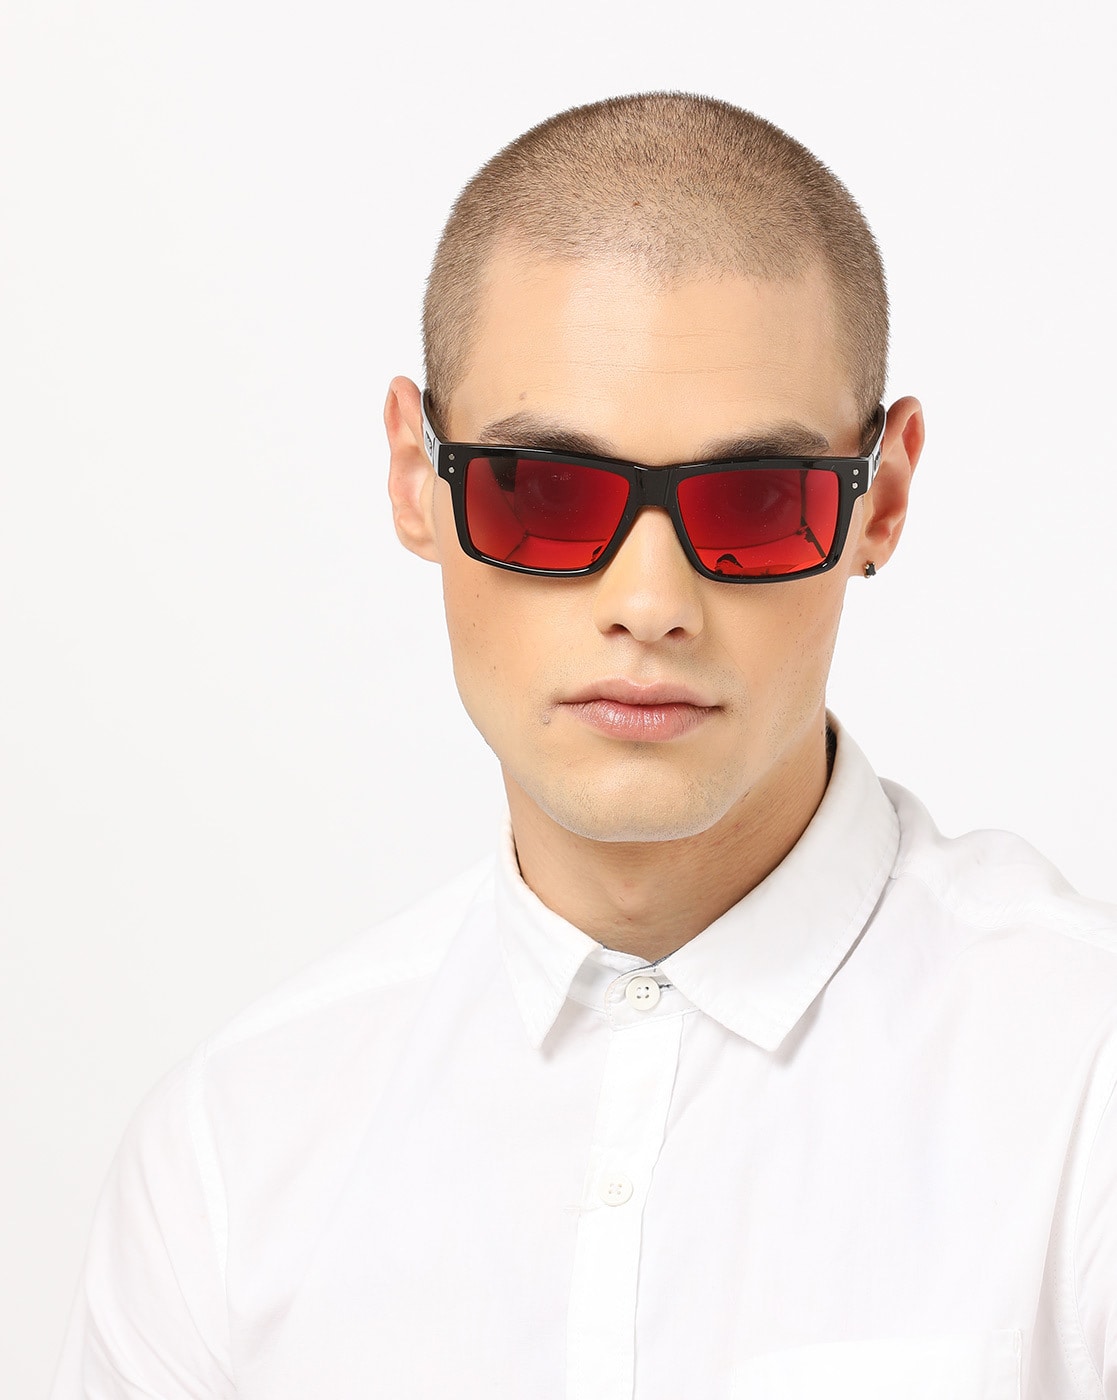 reebok sunglasses online